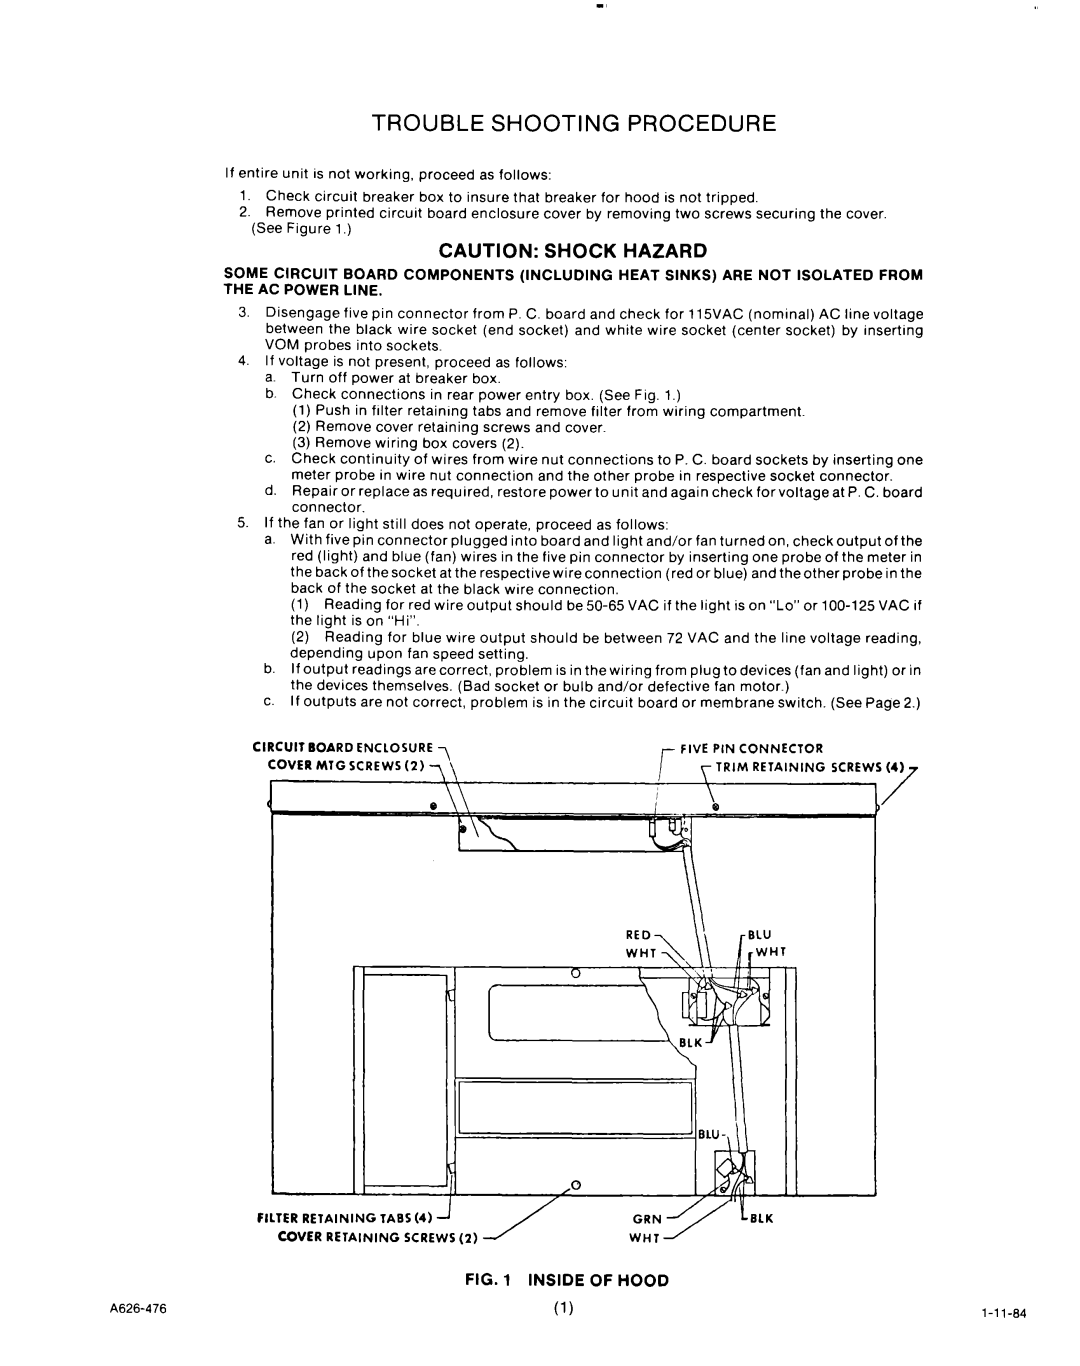 Whirlpool RH8930XLS manual Trouble Shooting Procedure, Caution Shock Hazard 